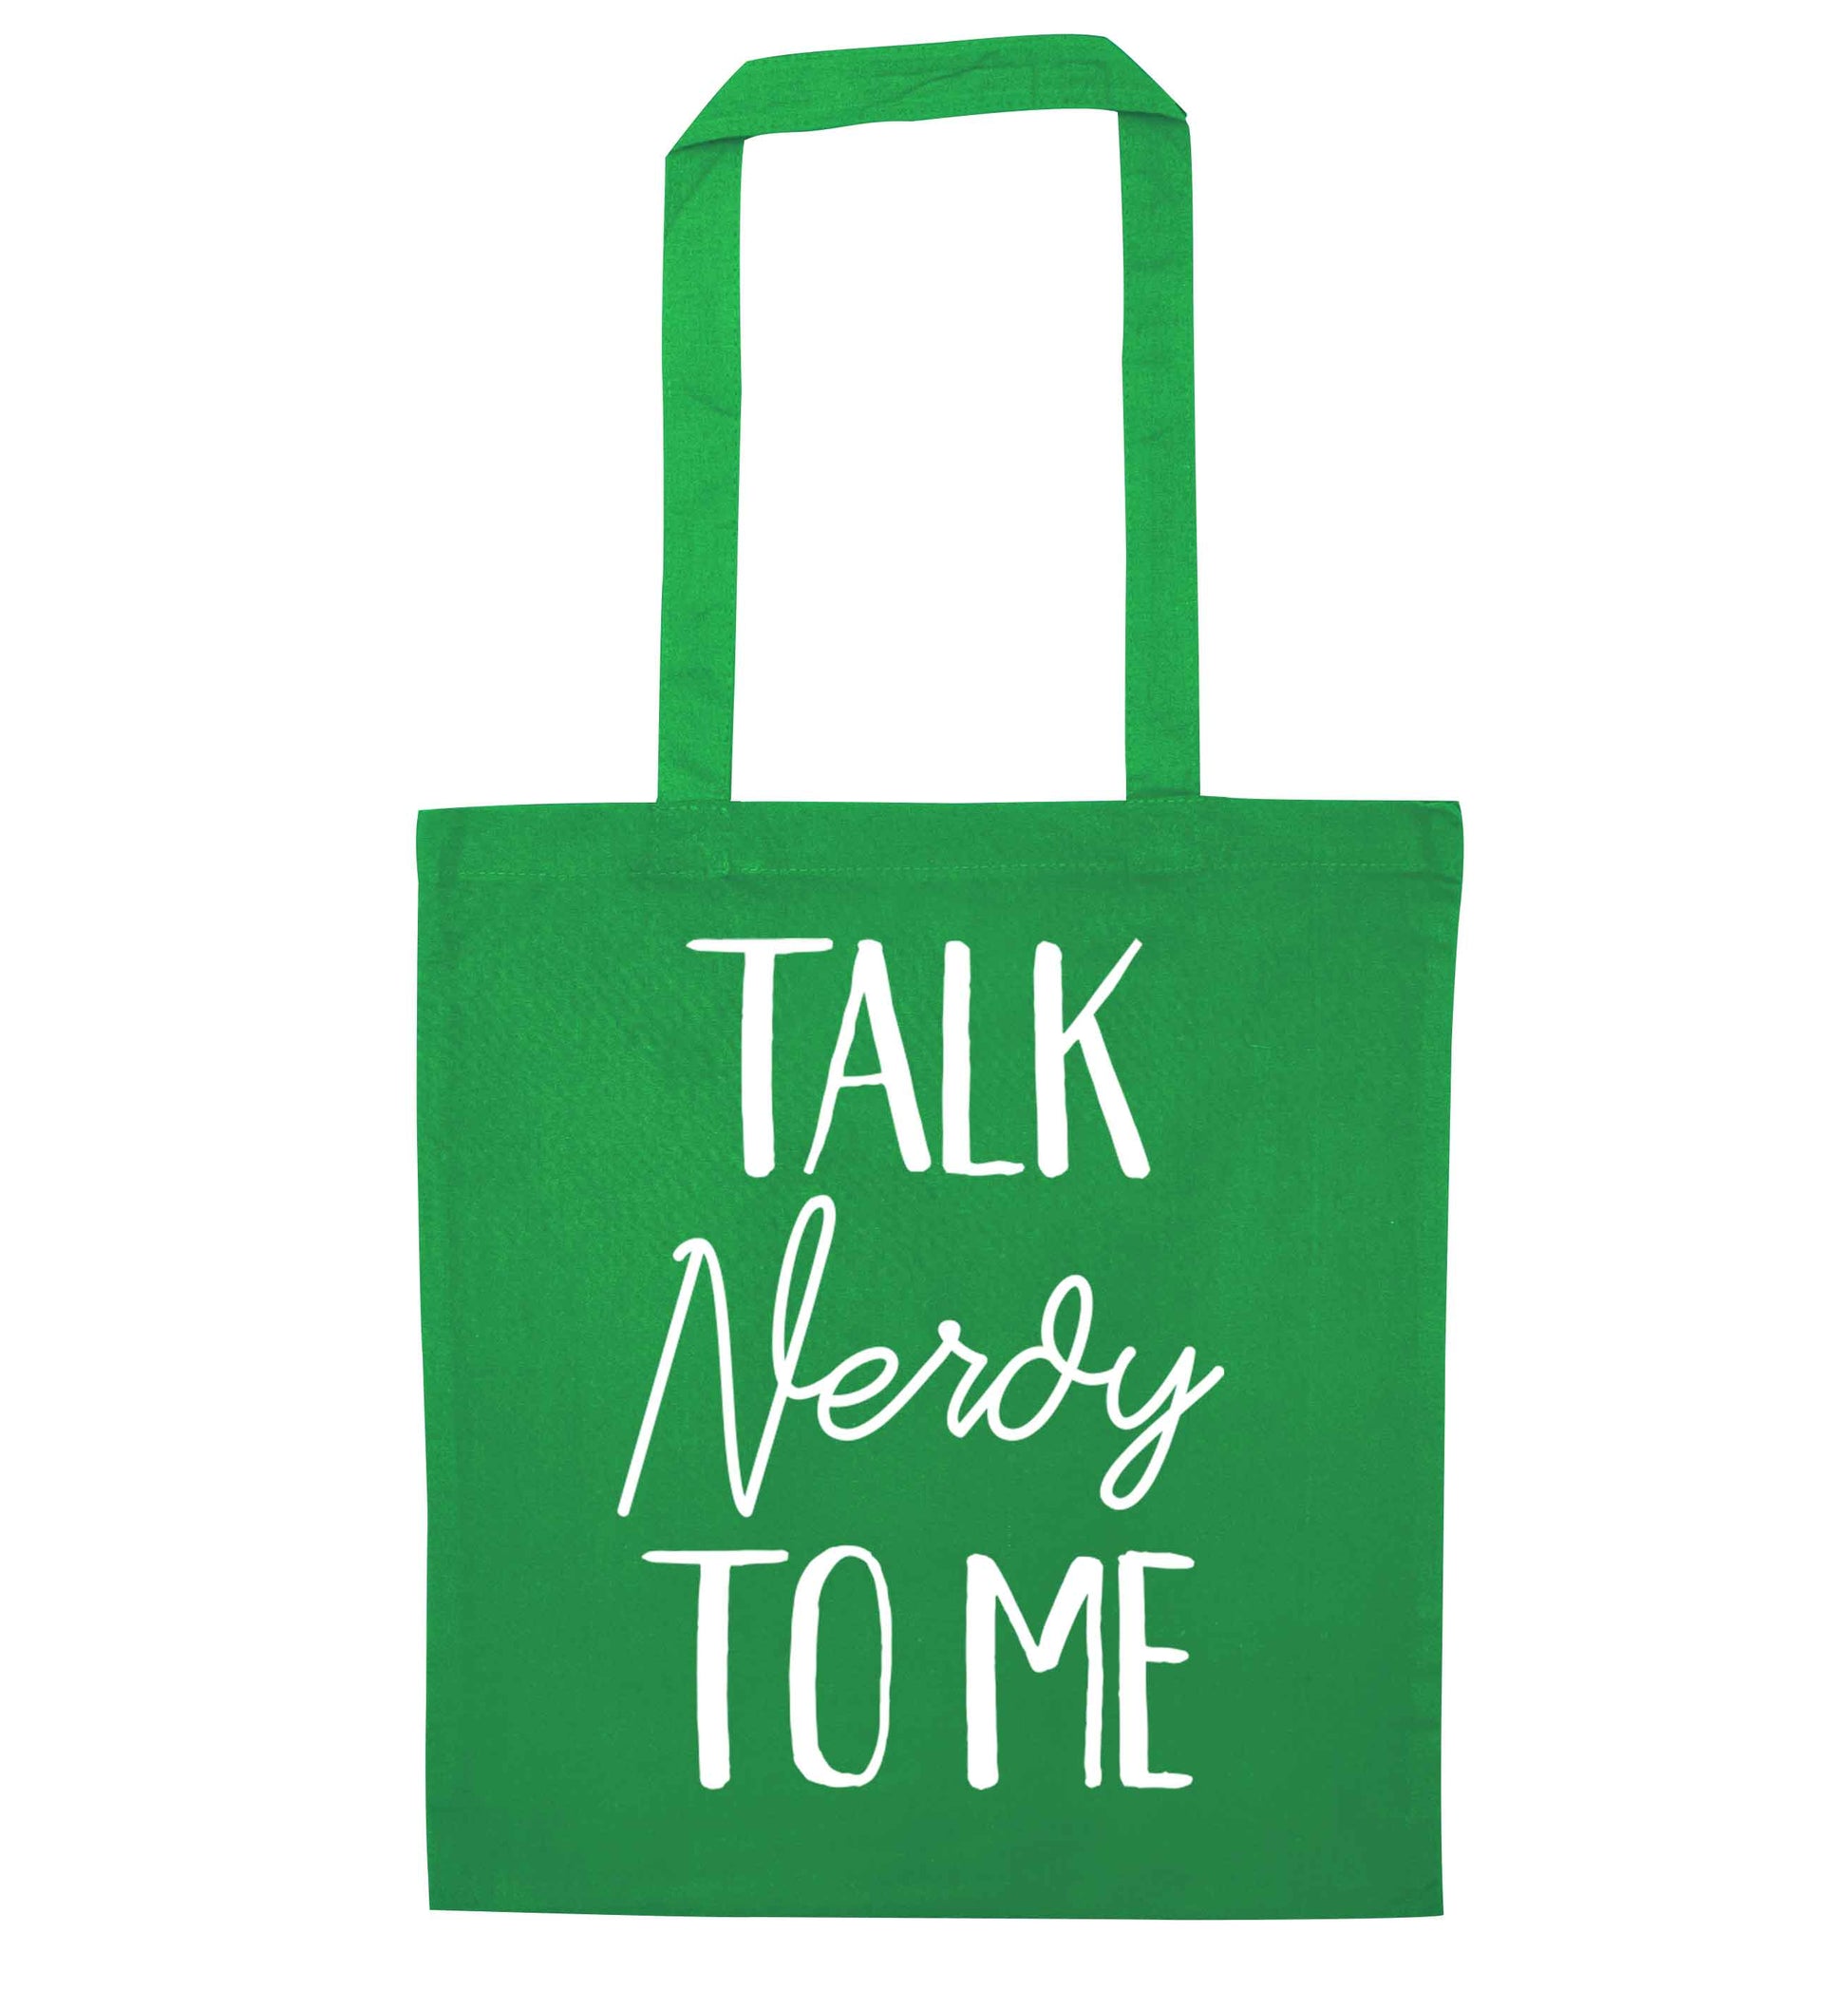 Talk nerdy to me green tote bag